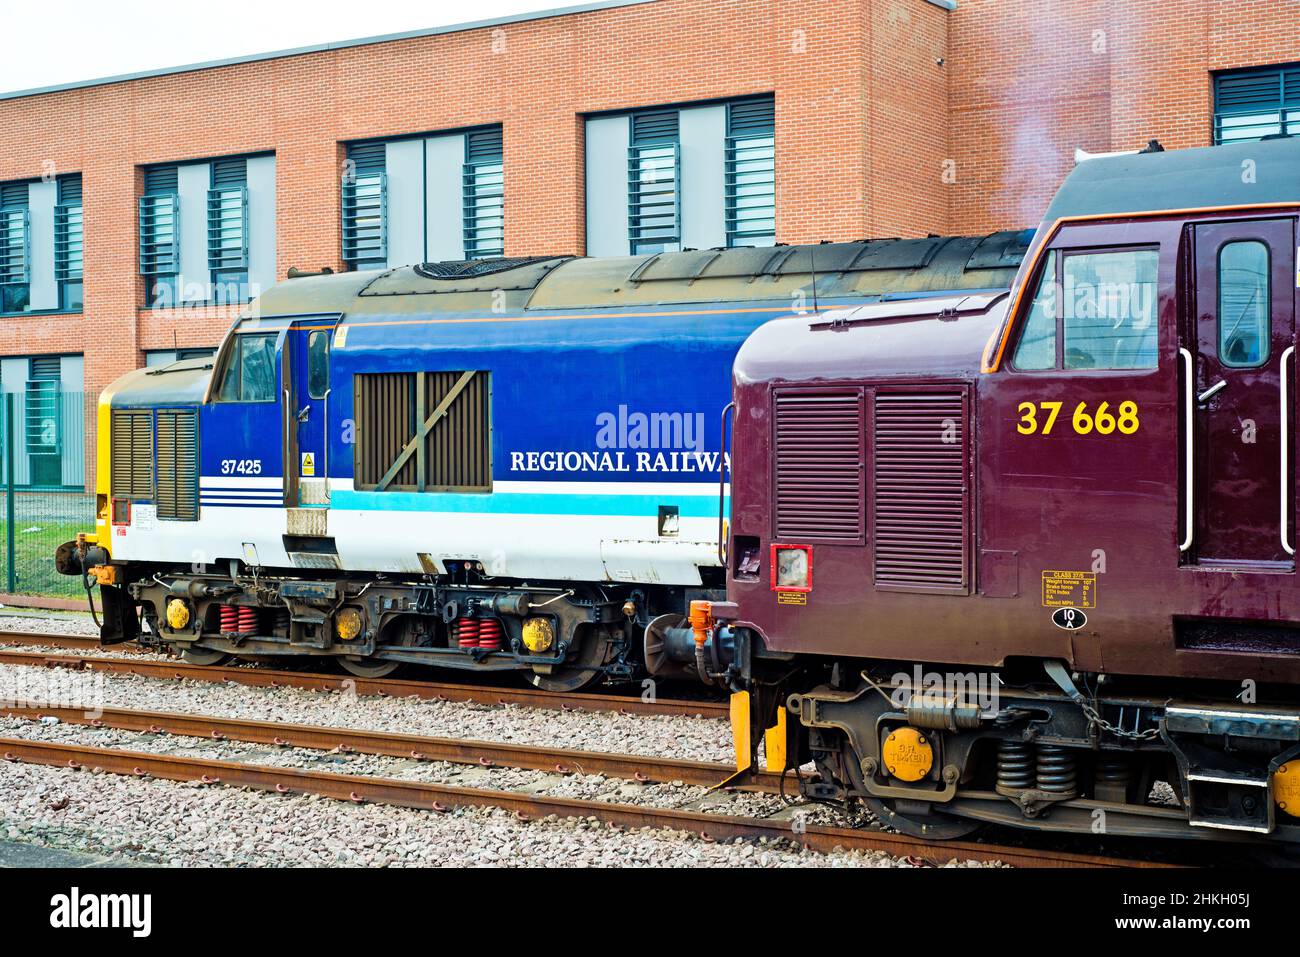 Regional Railways Class 37 425 locomotive and West Coast Railways class 37668 locomotive stabled at York railway station, York, England Stock Photo